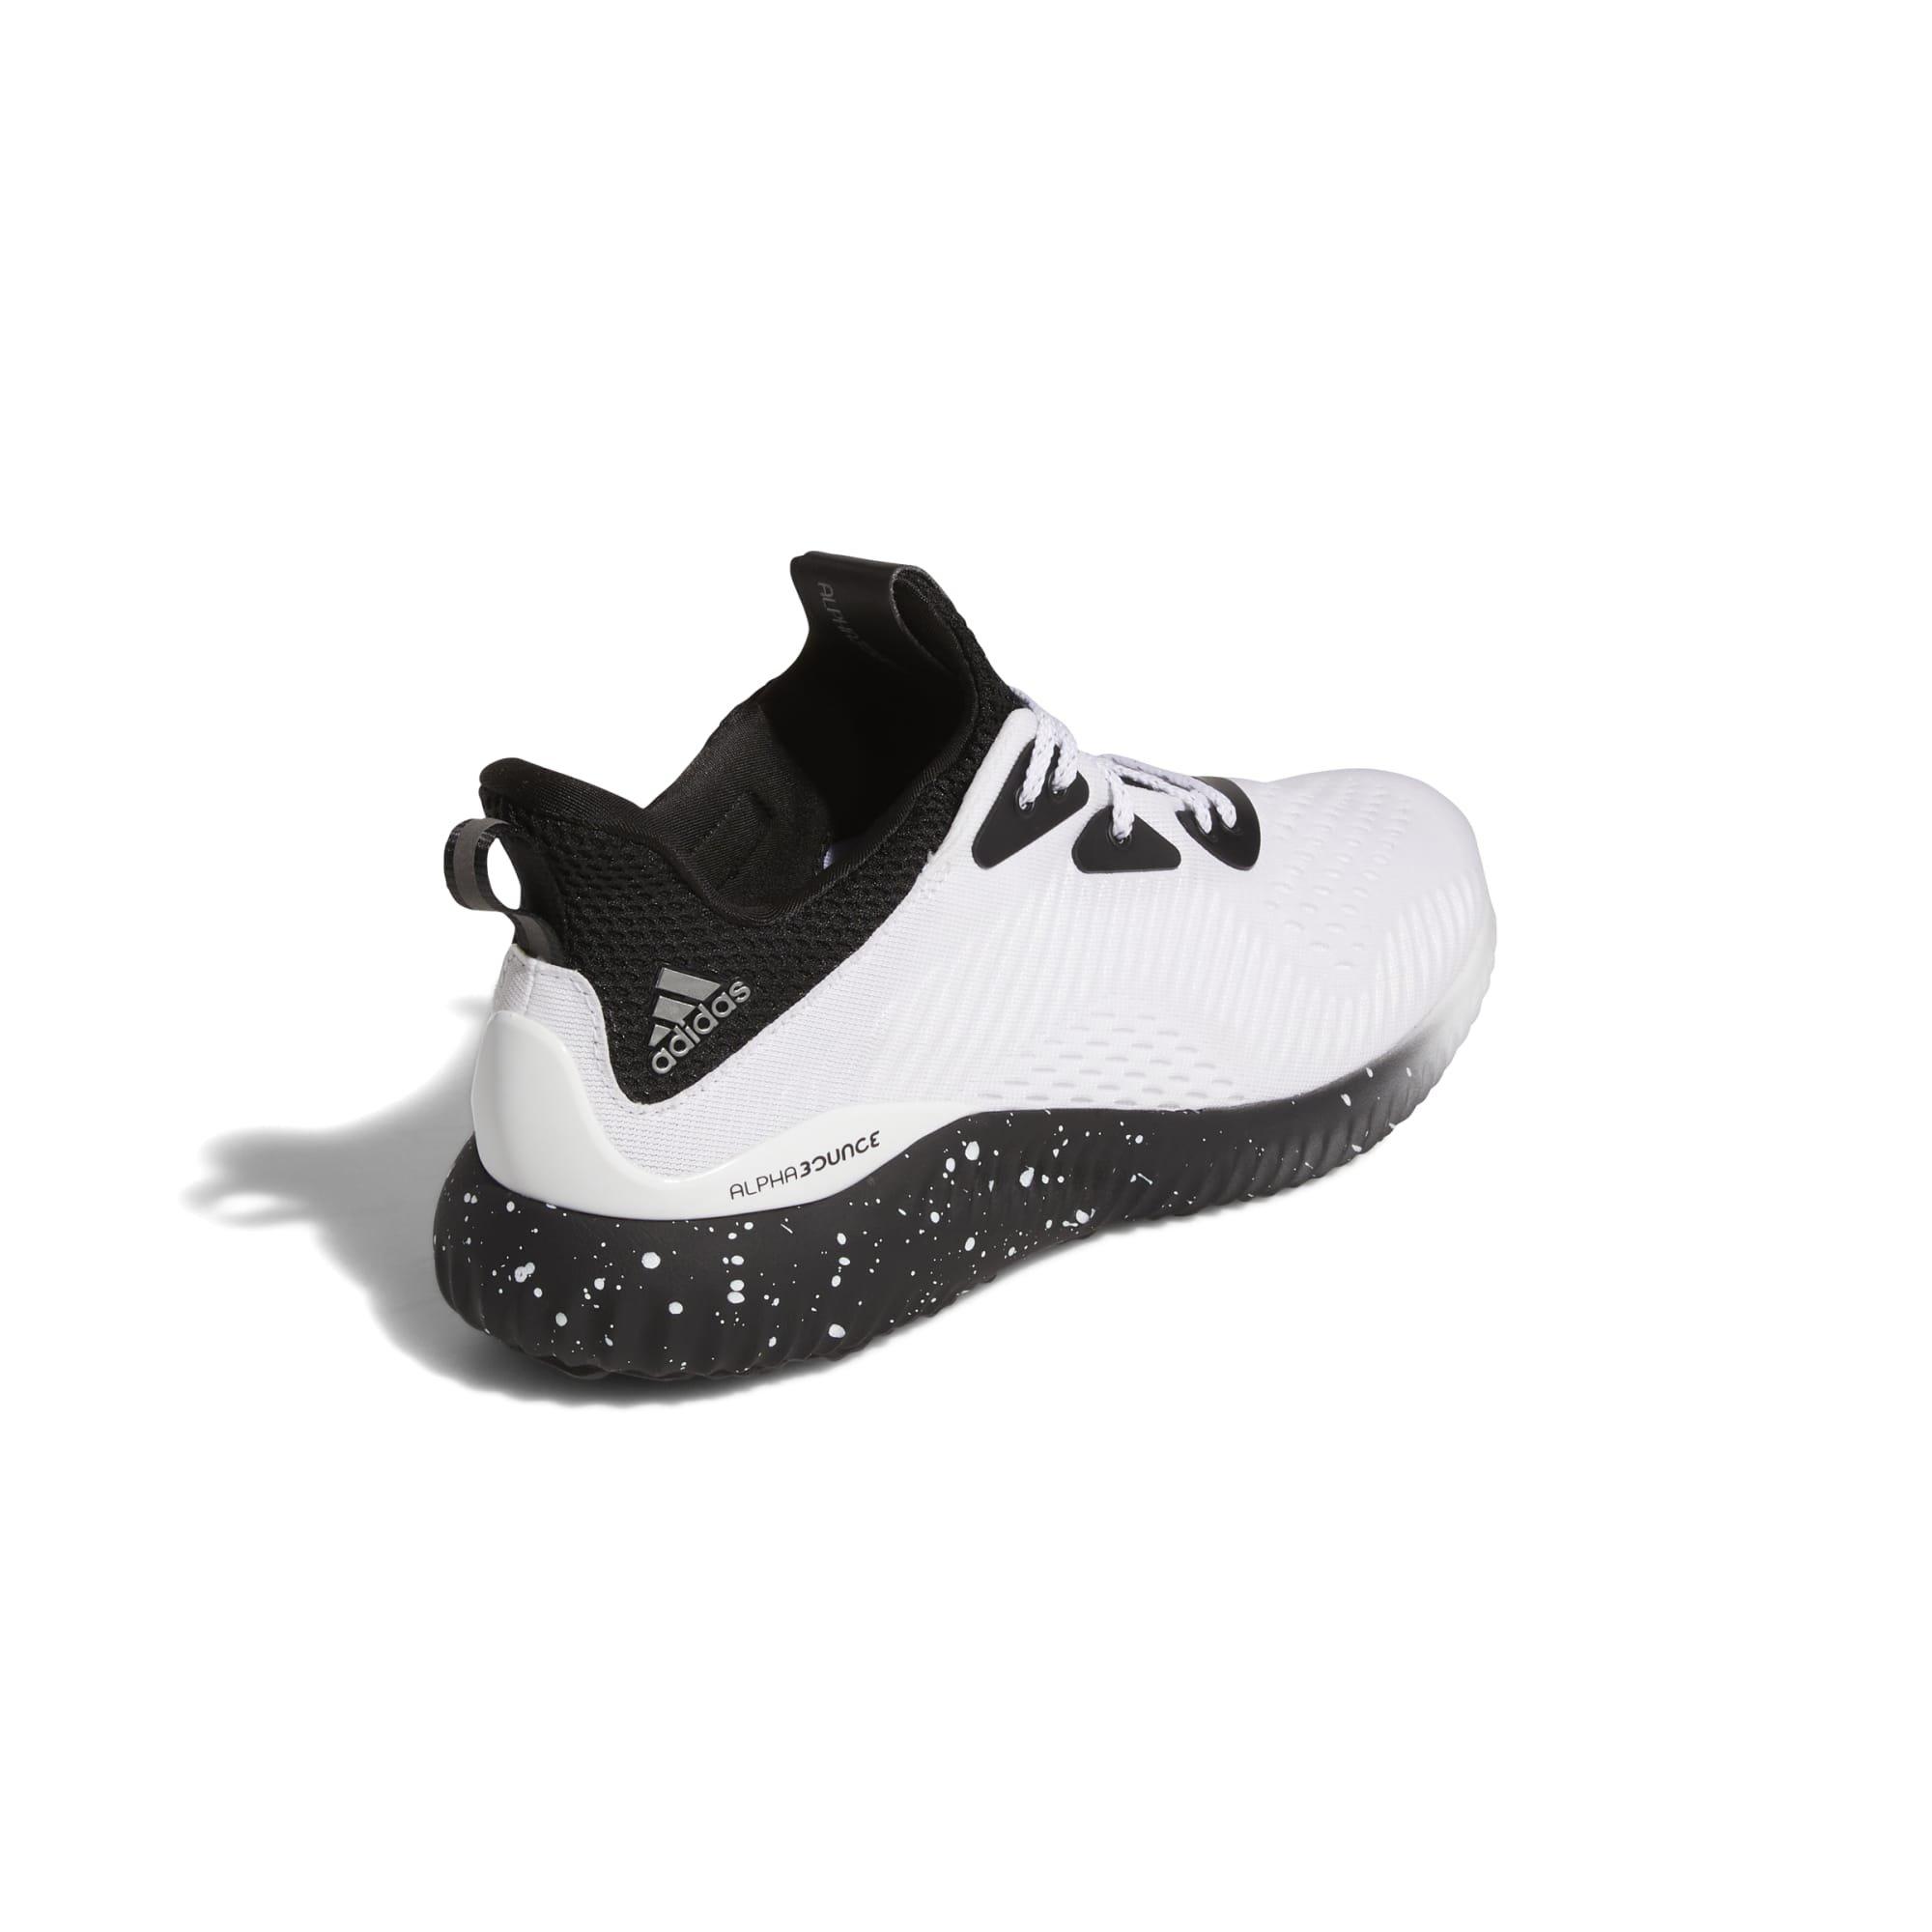 adidas Alphabounce "Ftwr White/Core Black" Men's Running Shoe